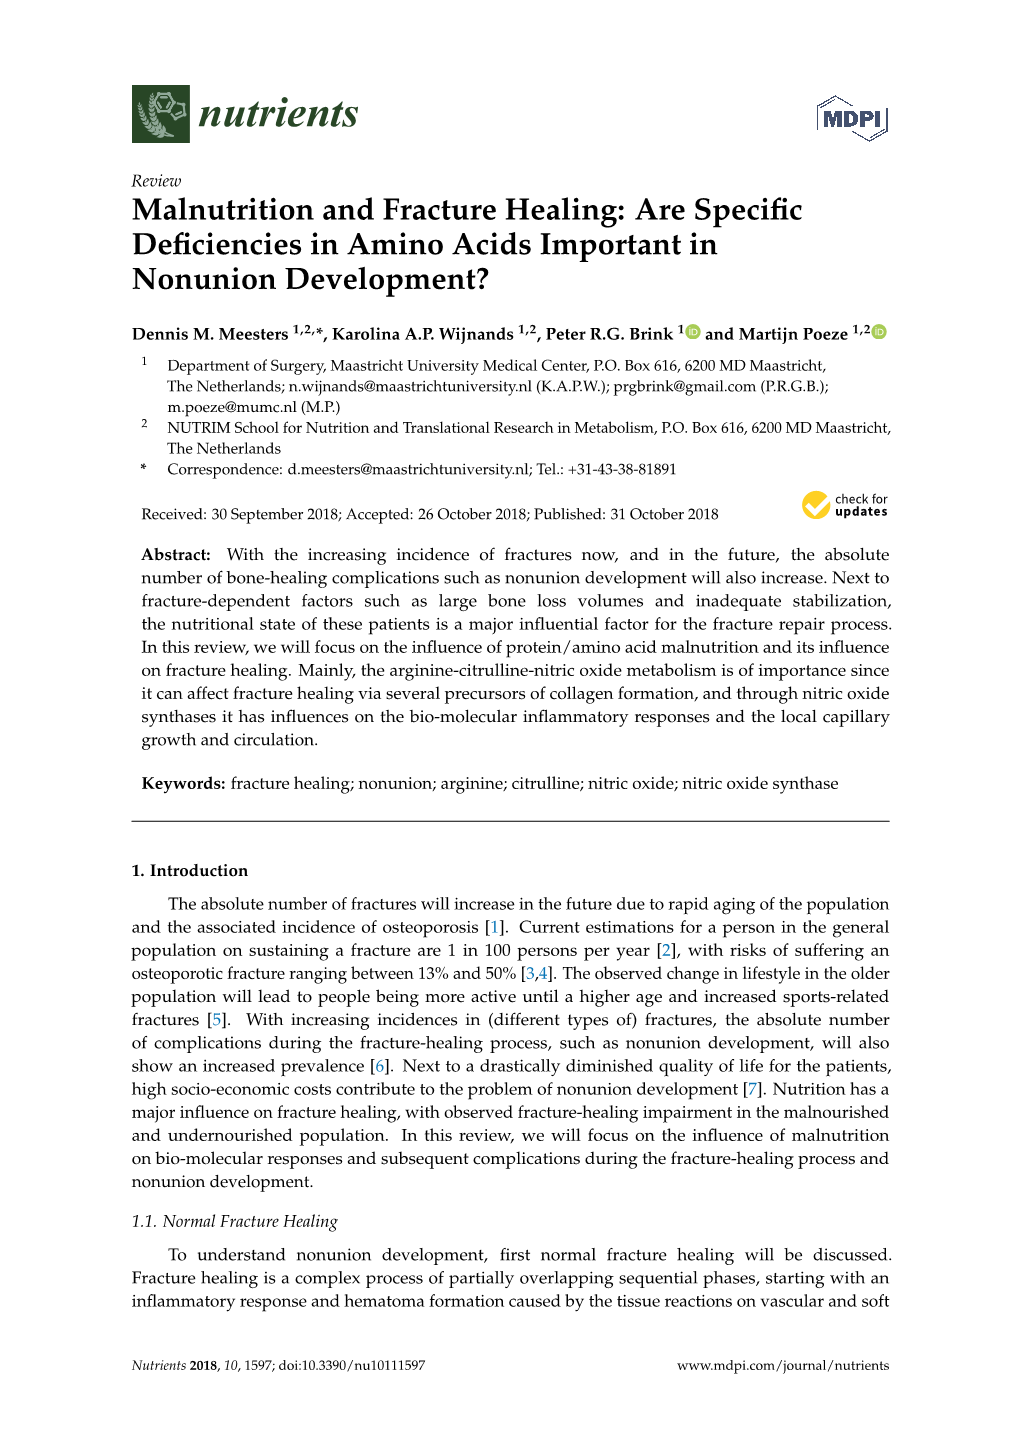 Malnutrition and Fracture Healing: Are Speciﬁc Deﬁciencies in Amino Acids Important in Nonunion Development?